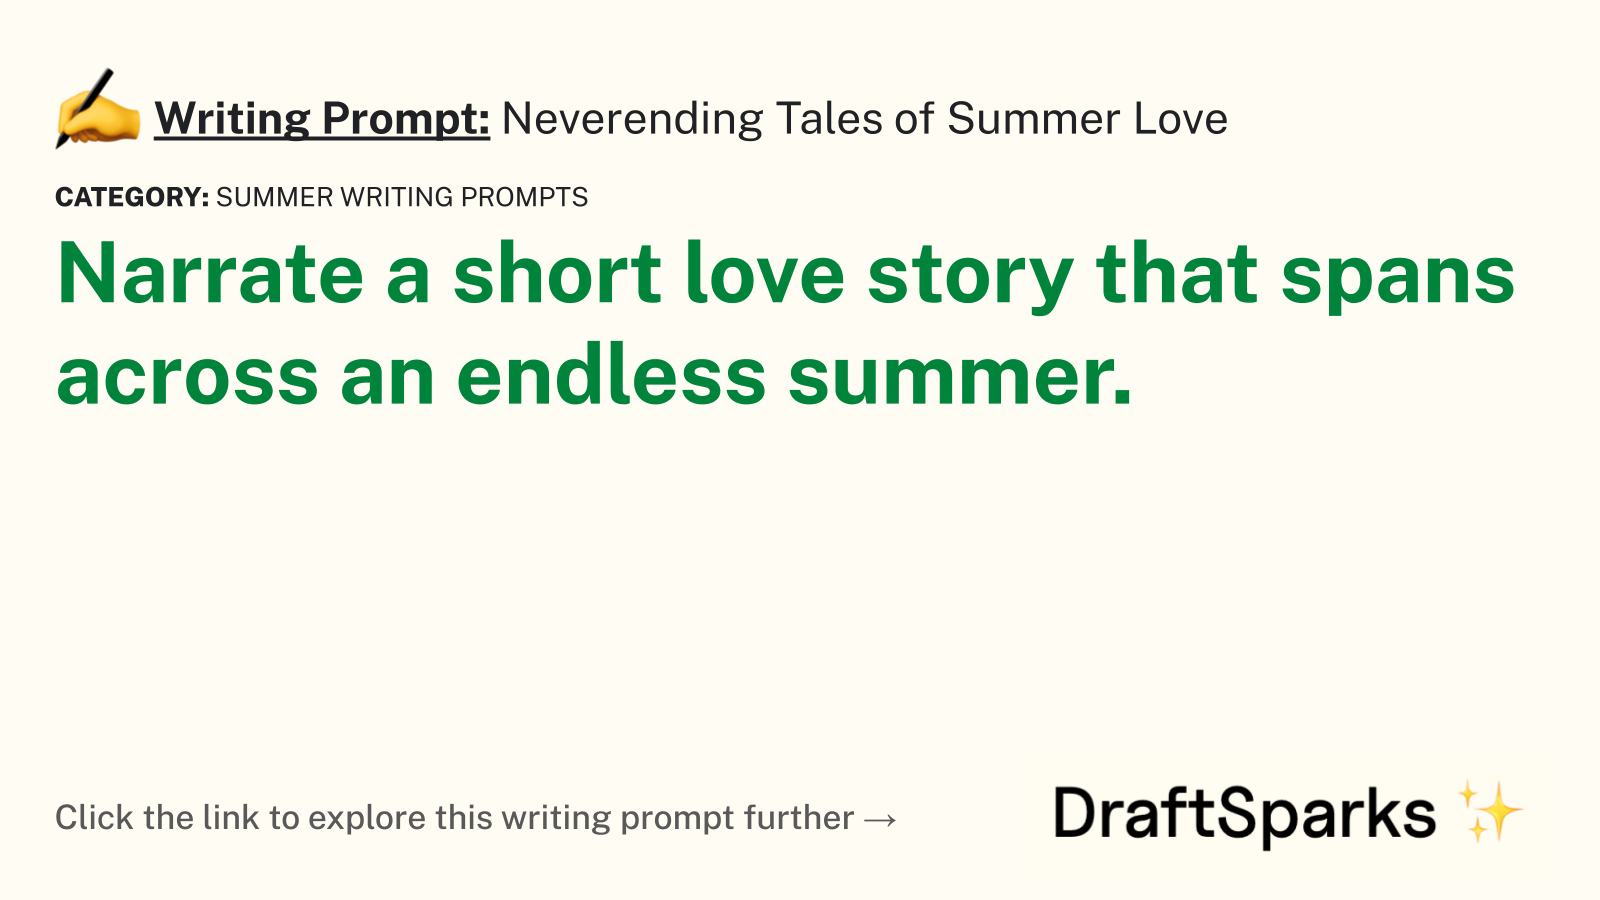 Neverending Tales of Summer Love